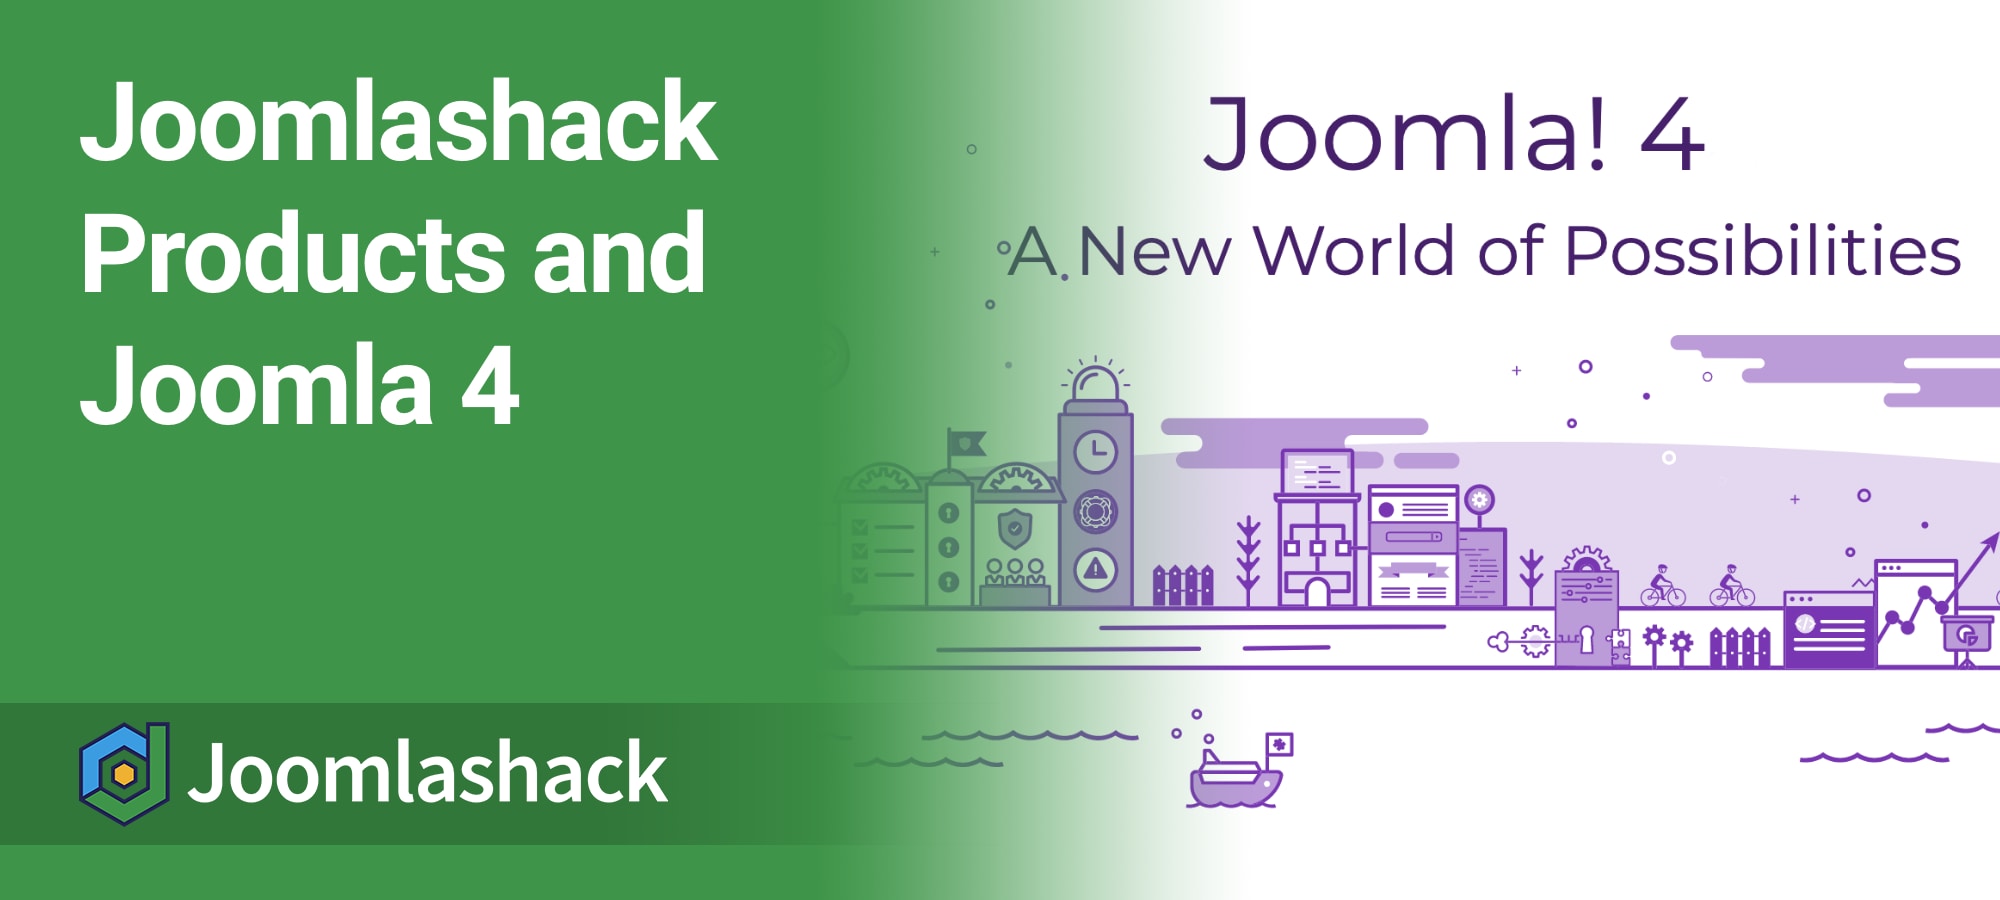 Joomlashack Products and Joomla 4